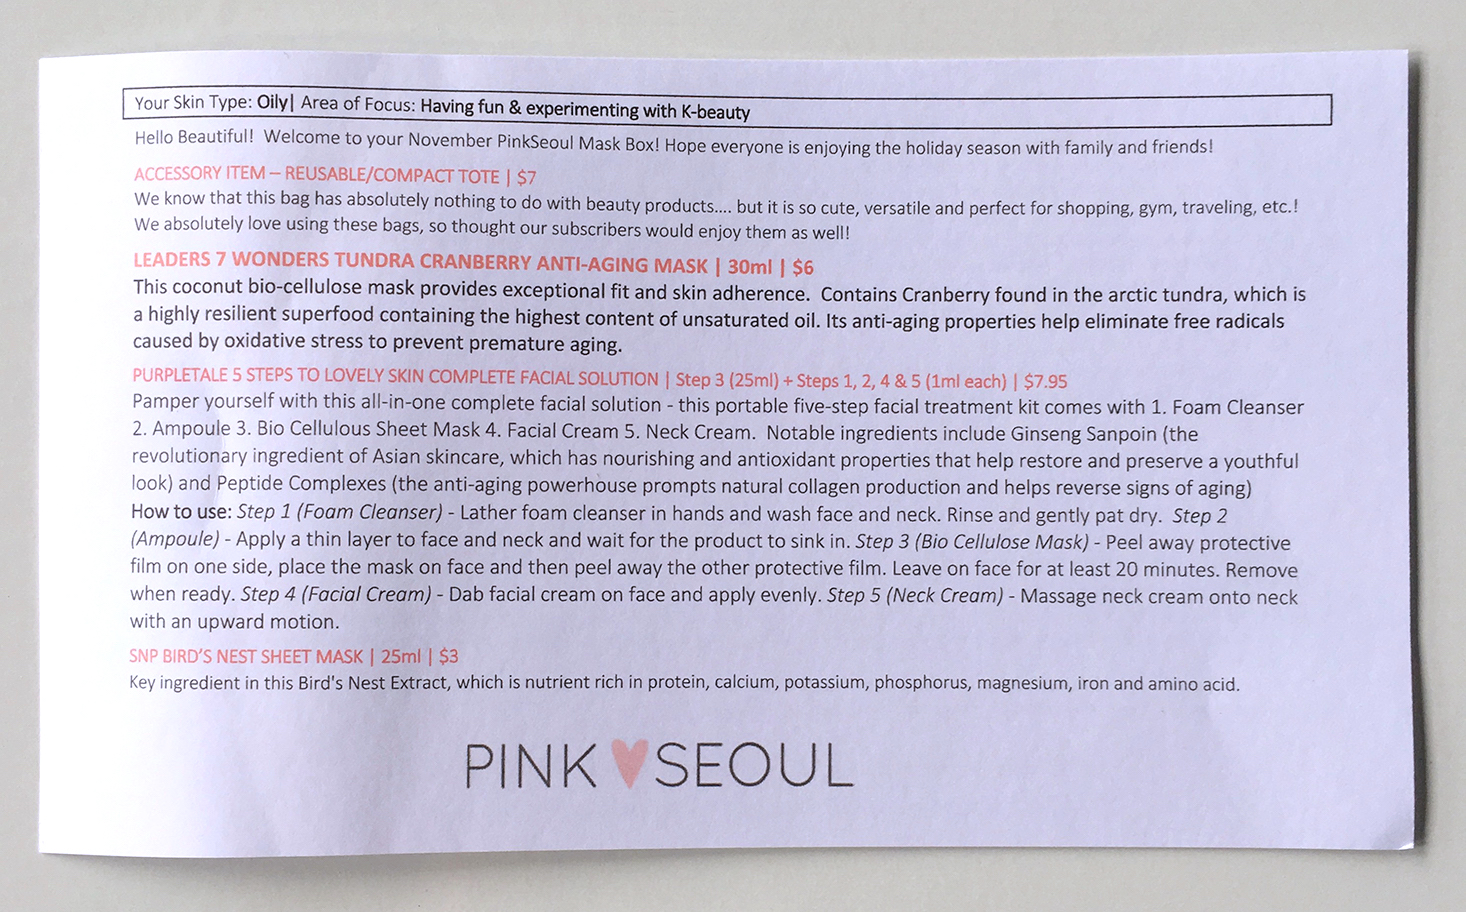 pinkseoul-mask-box-november-2016-booklet-front